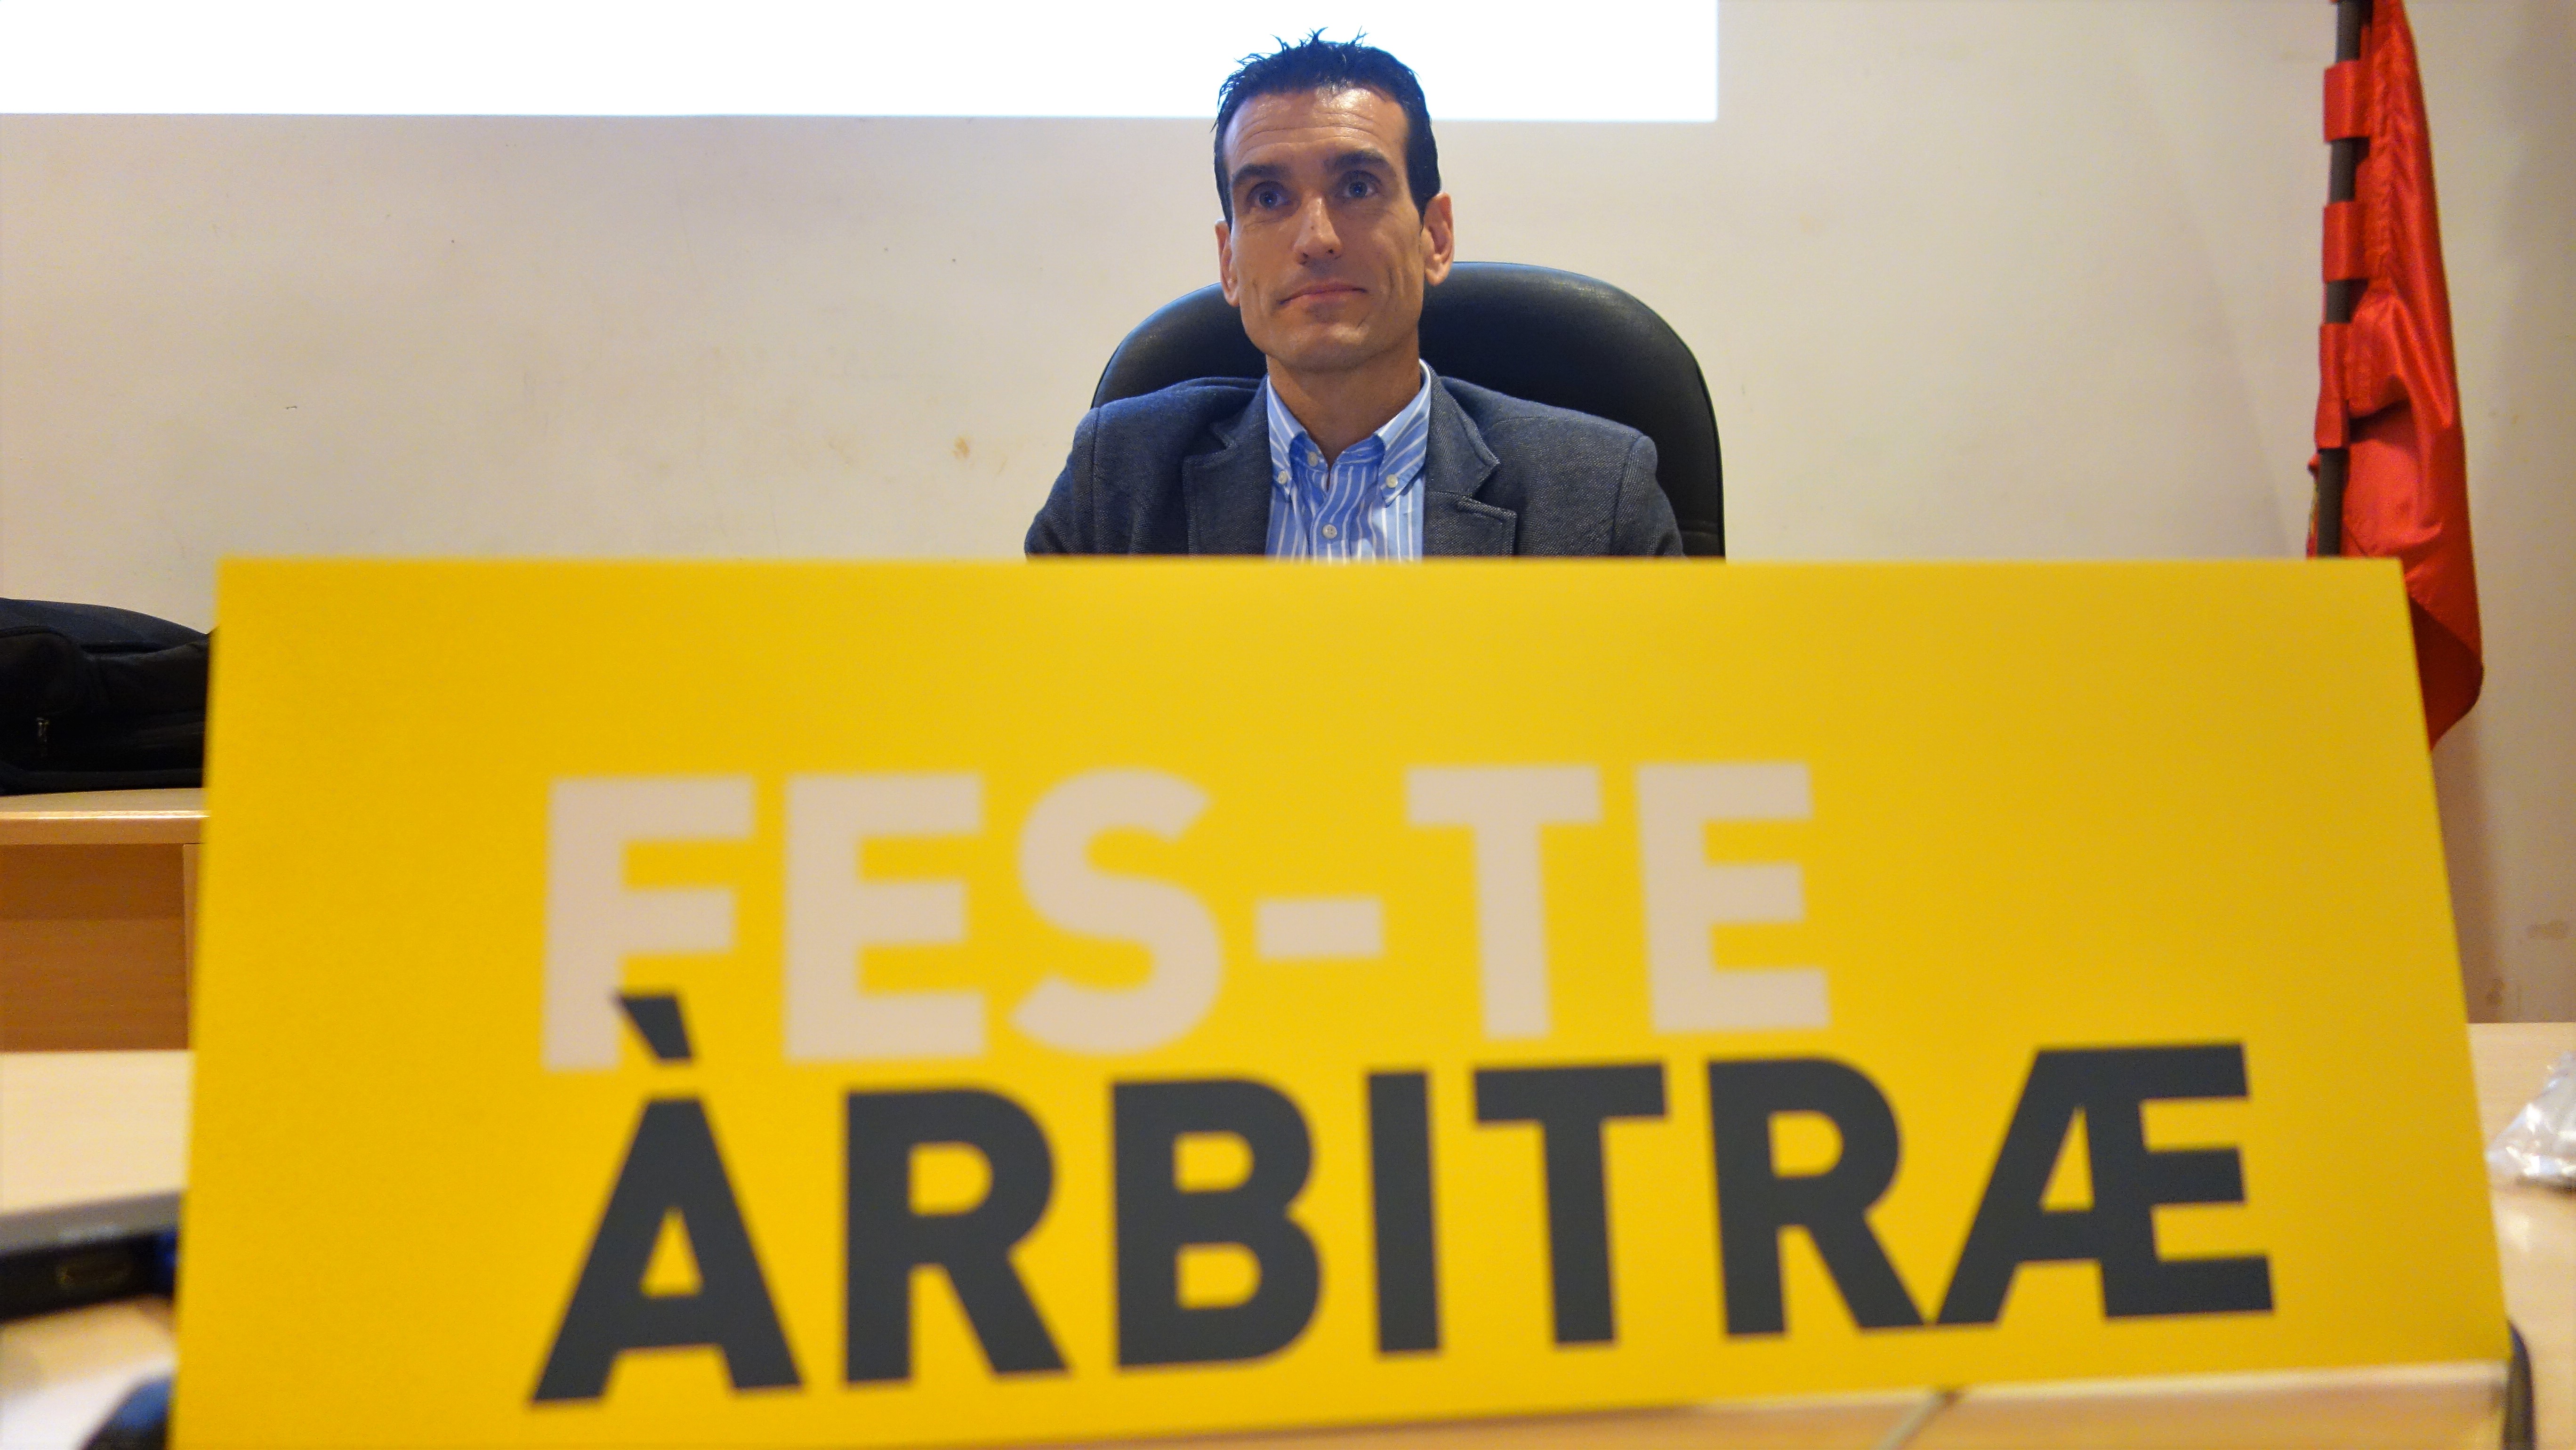 20 junio - Martínez Munuera promociona 'Fes-te Àrbitræ'